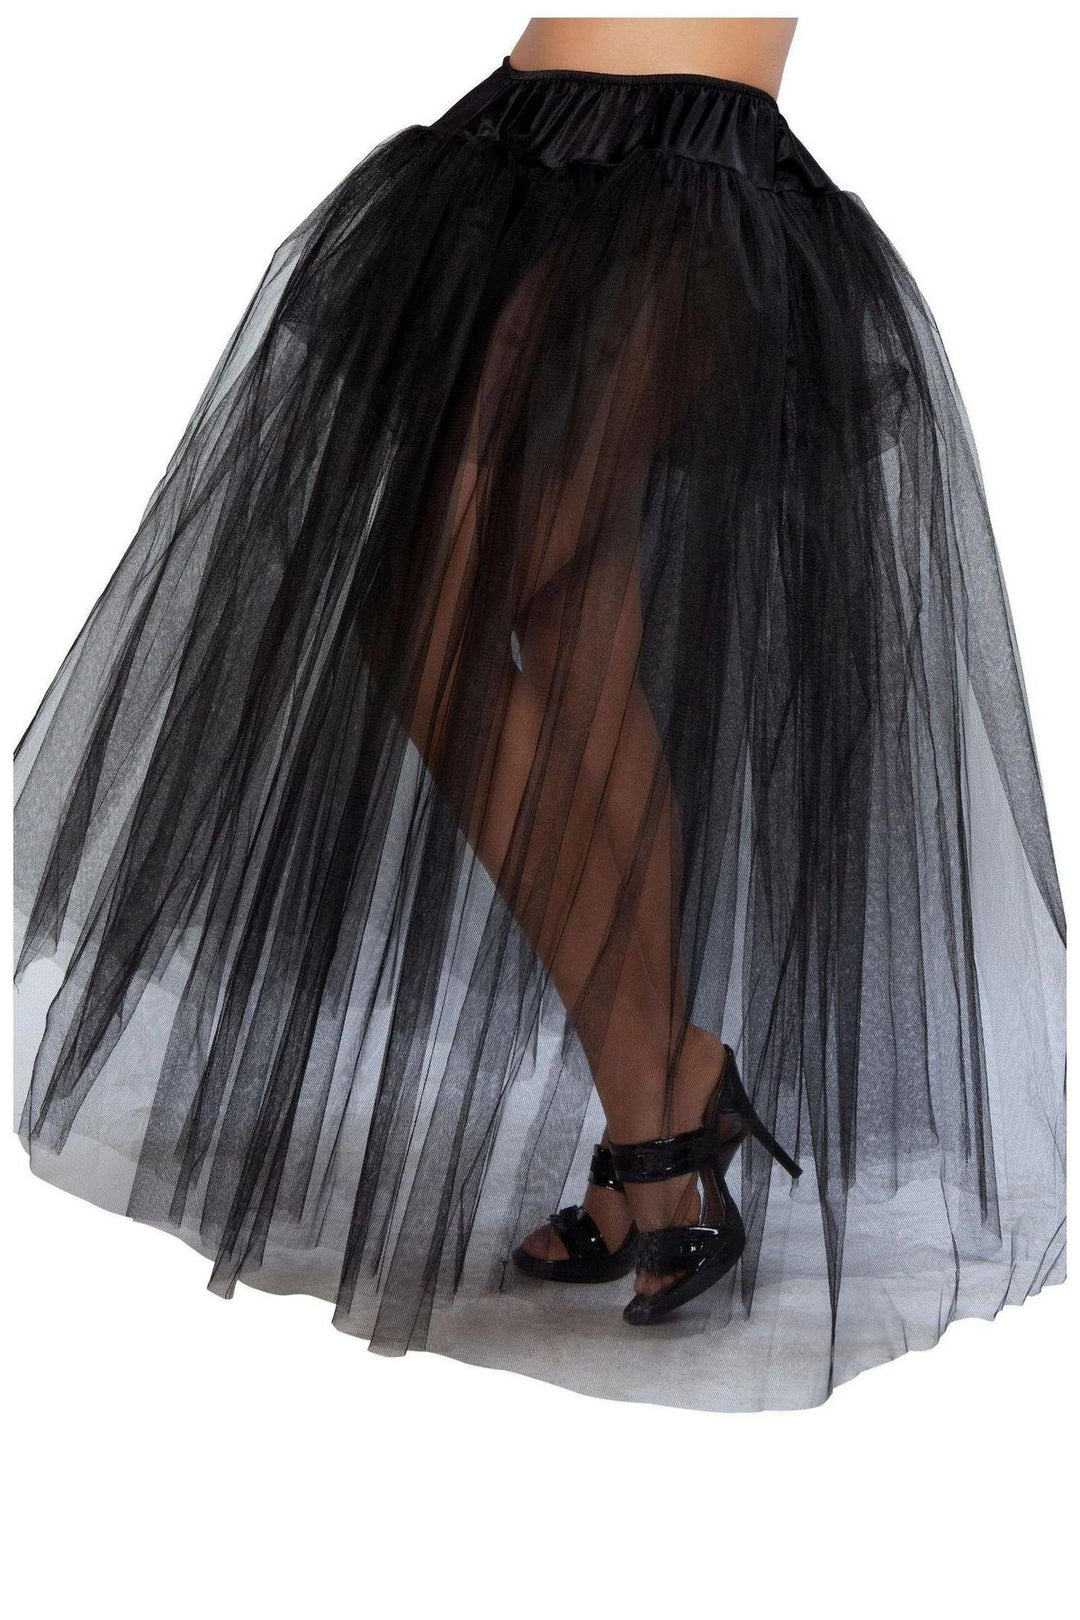 Roma Full Length Petticoat Costume-SEXYSHOES.COM